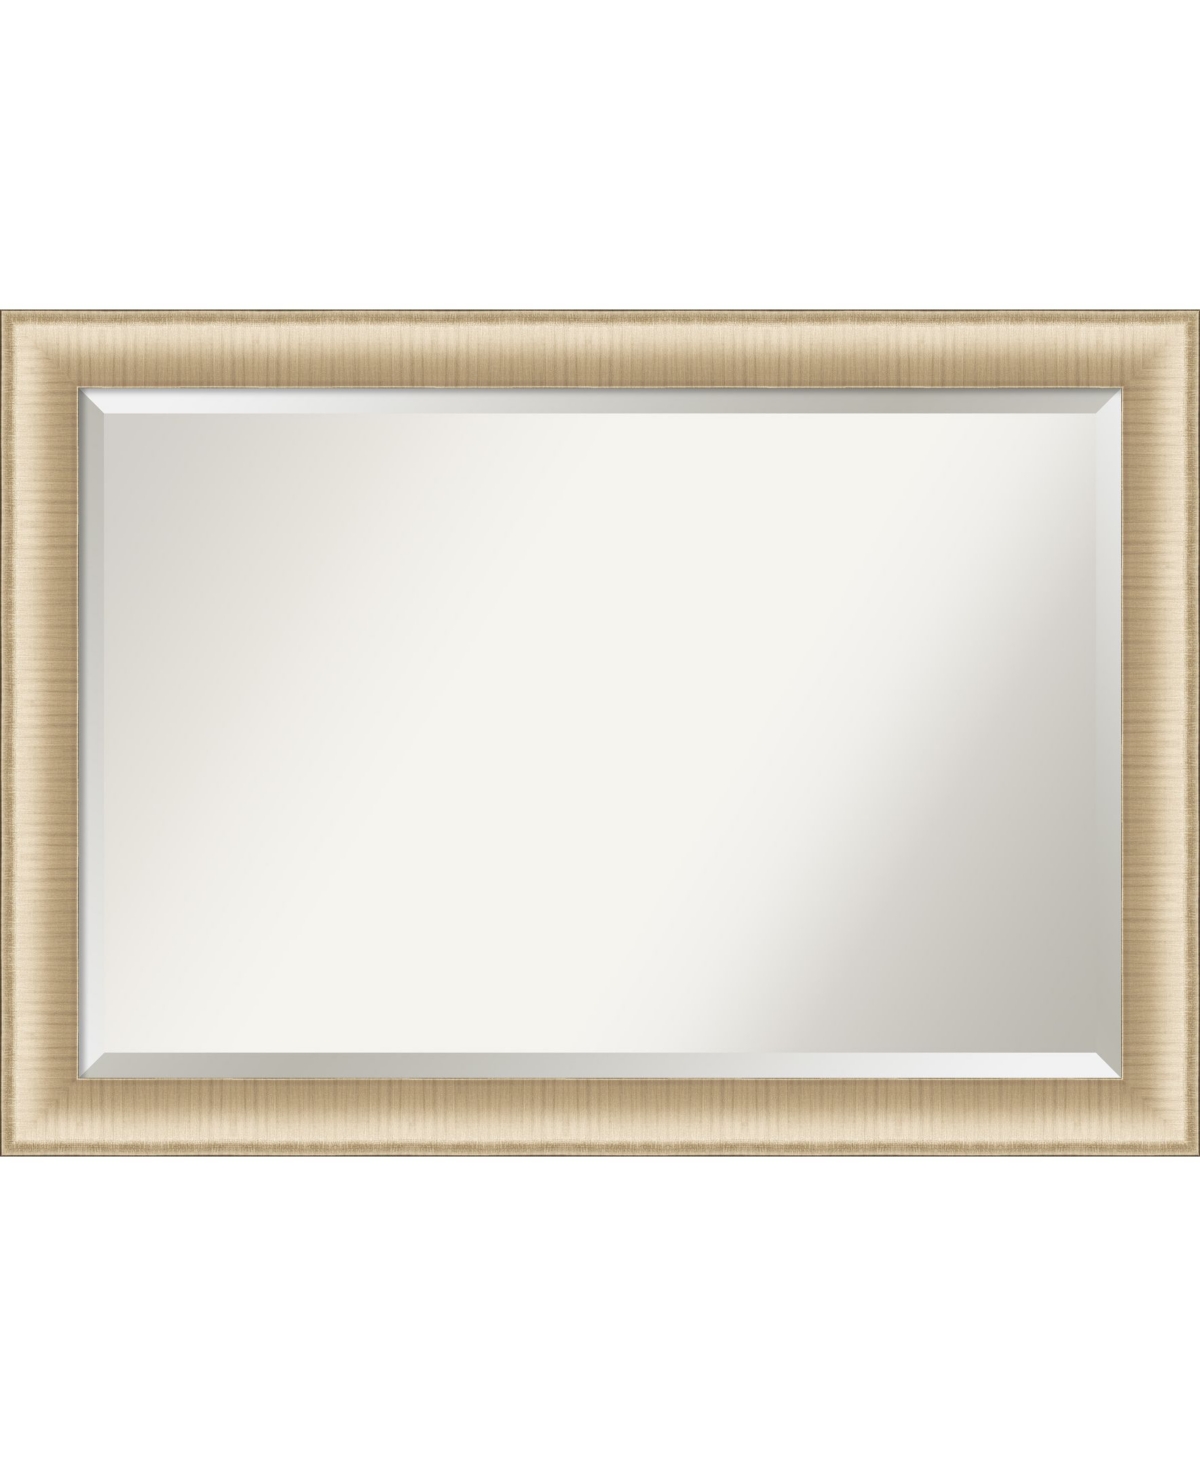 Elegant Brushed Honey Framed Bathroom Vanity Wall Mirror, 40.75" x 28.75" - Gold